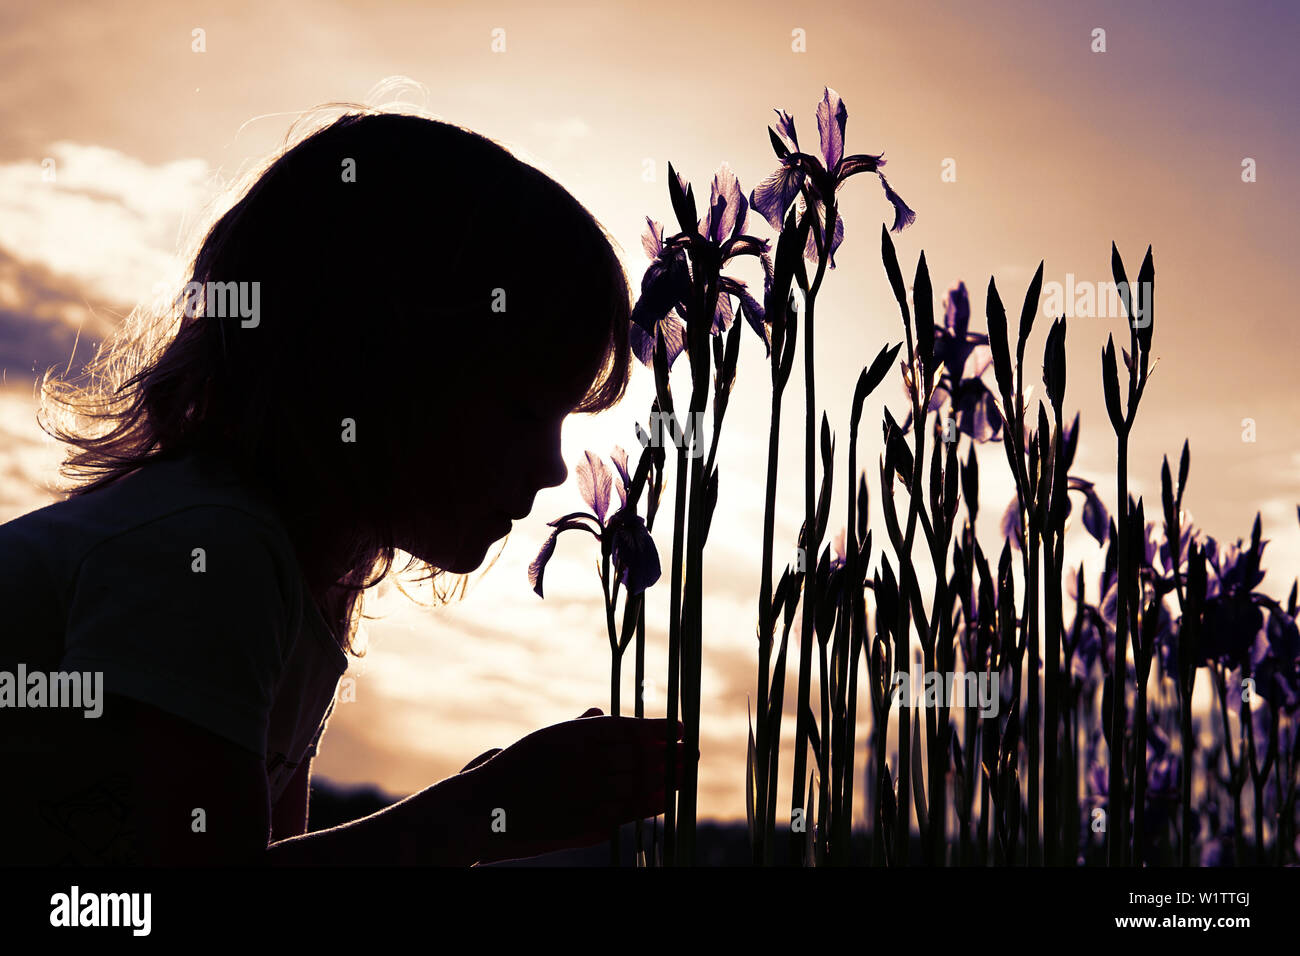 A little girl sniffs purple iris flowers. Beautiful sunset sky. Stock Photo